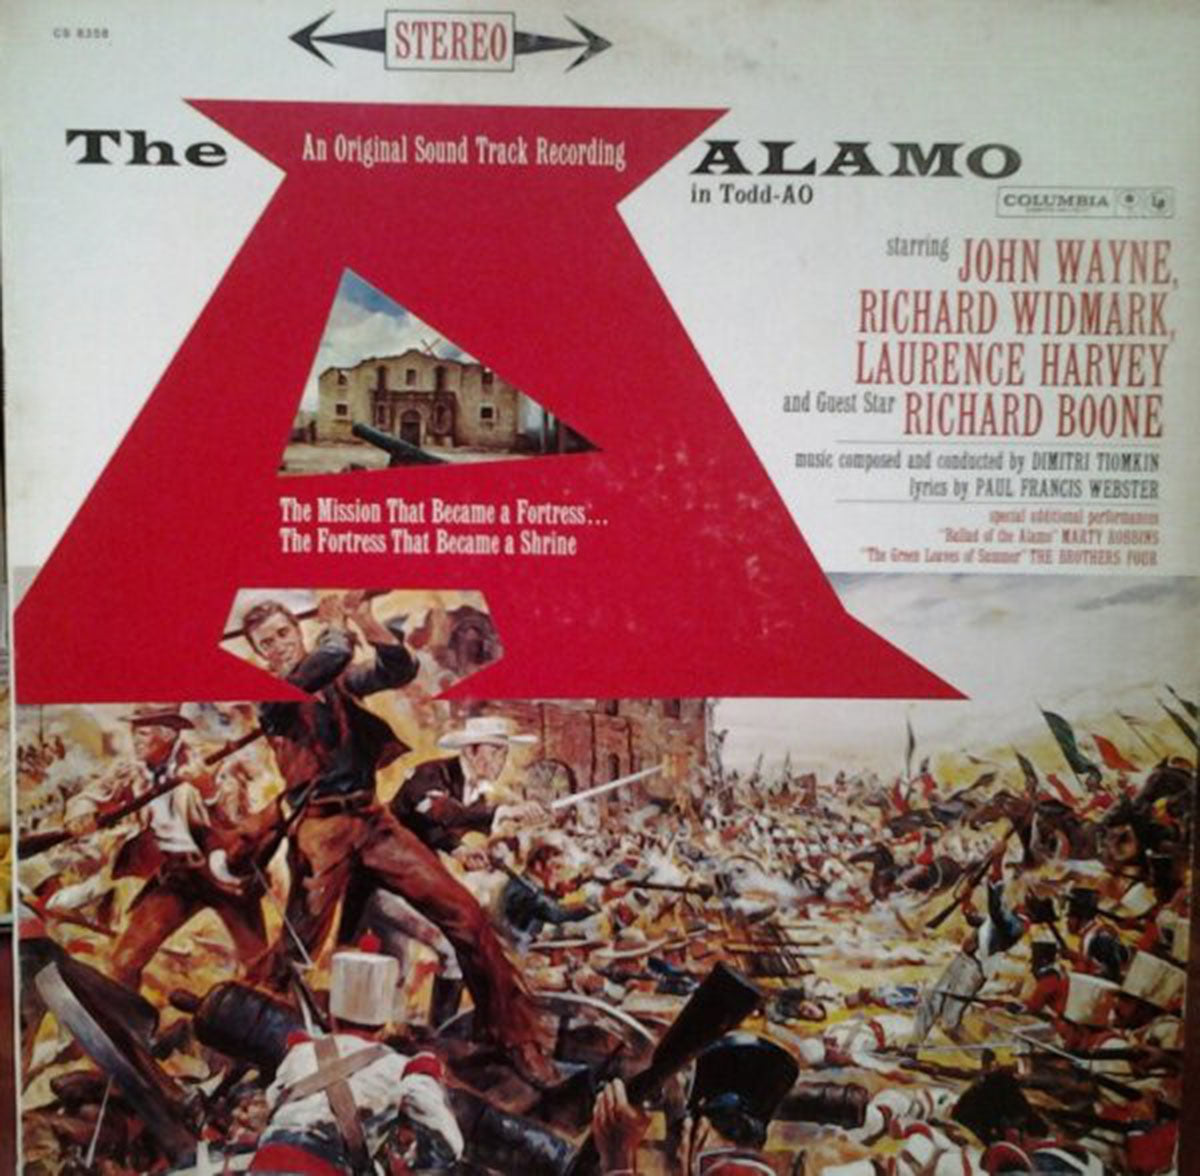 The Alamo - US Pressing